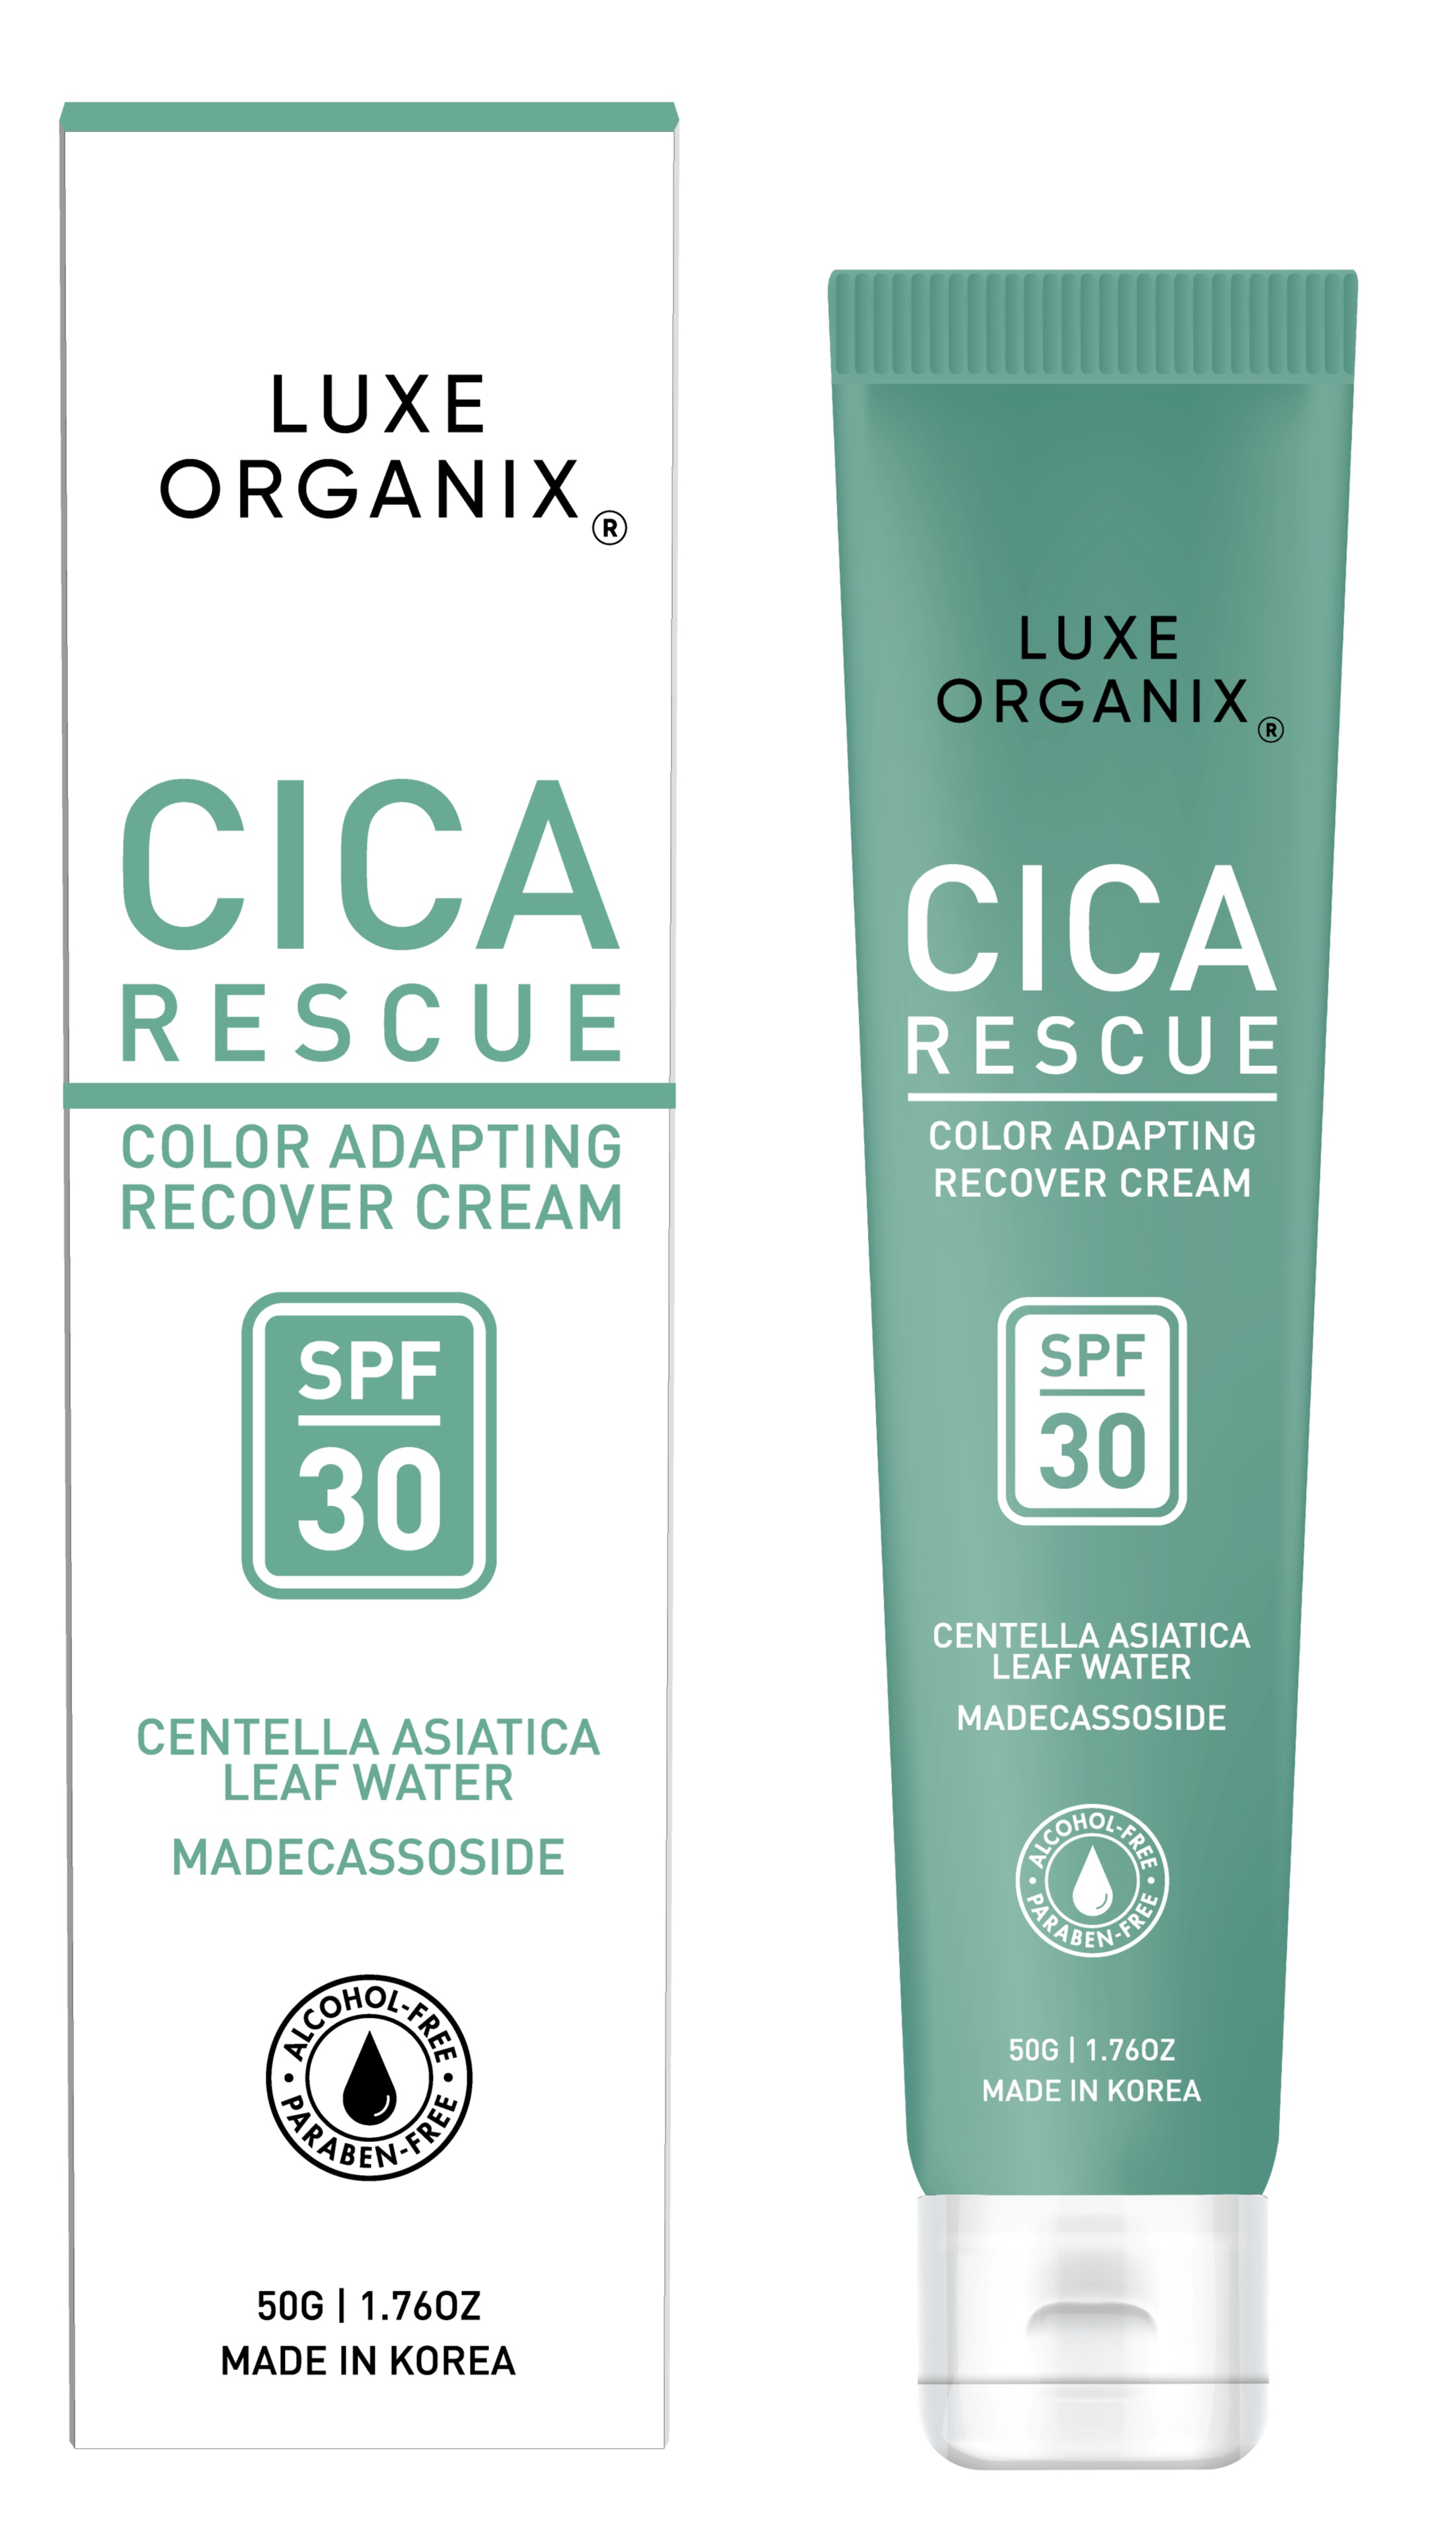 Luxe Organix Cica Rescue Color Adapting Recover Cream